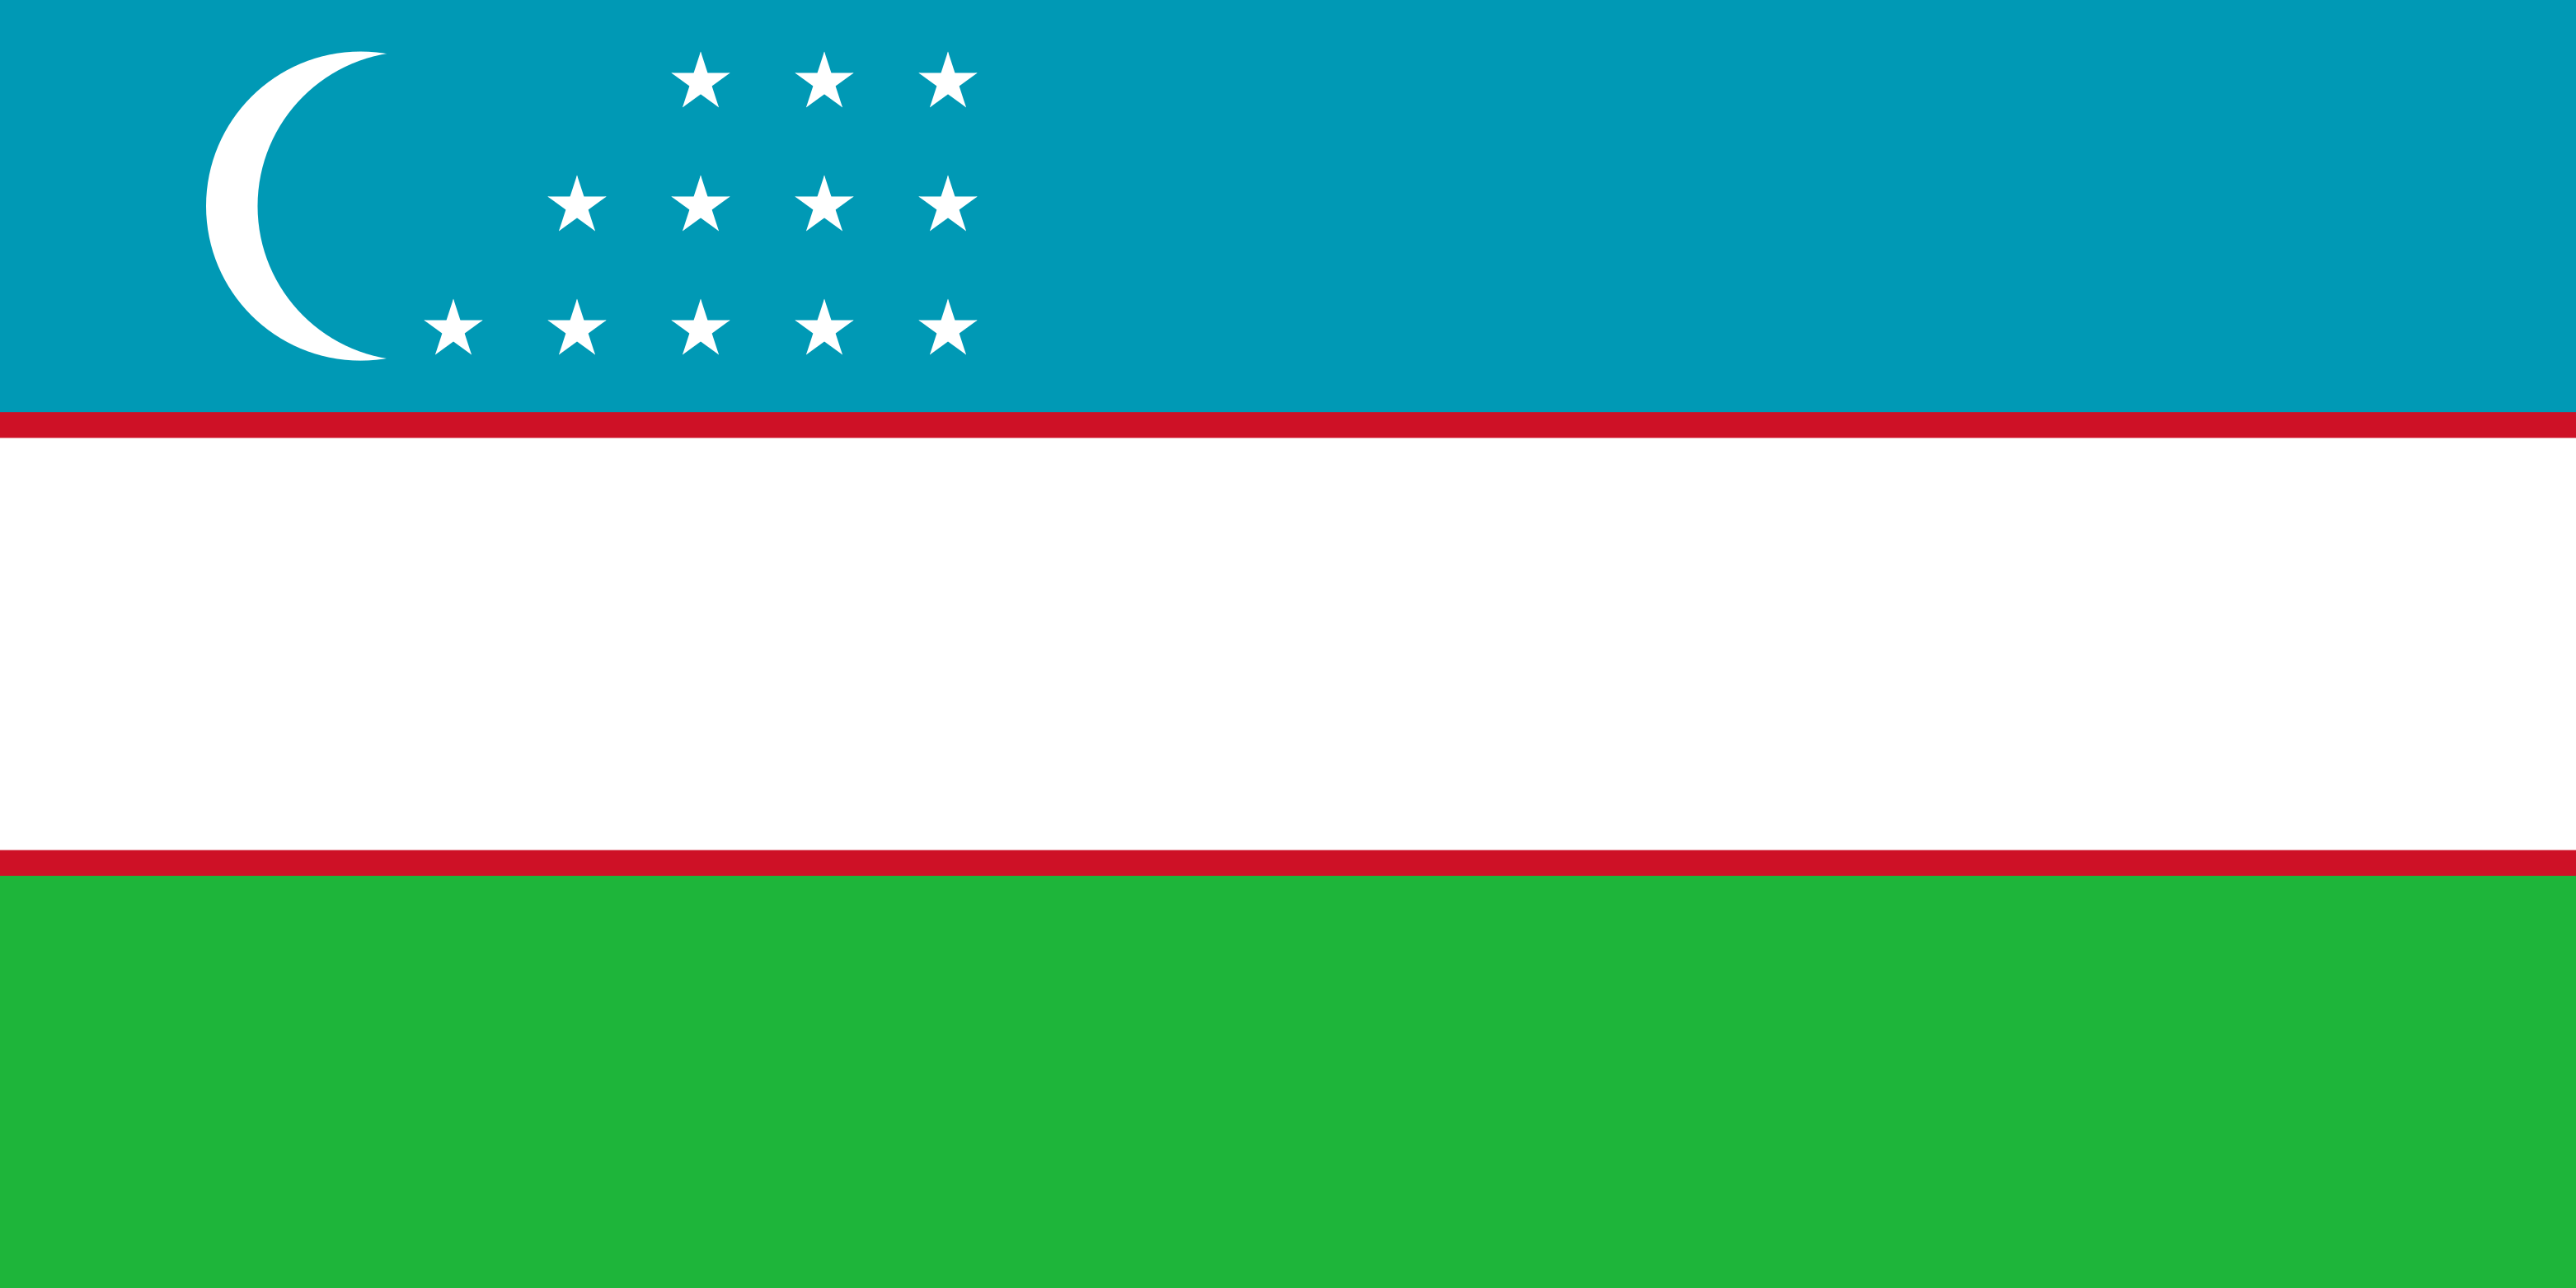 Free Uzbekistan Flag Documents: PDF, DOC, DOCX, HTML & More!